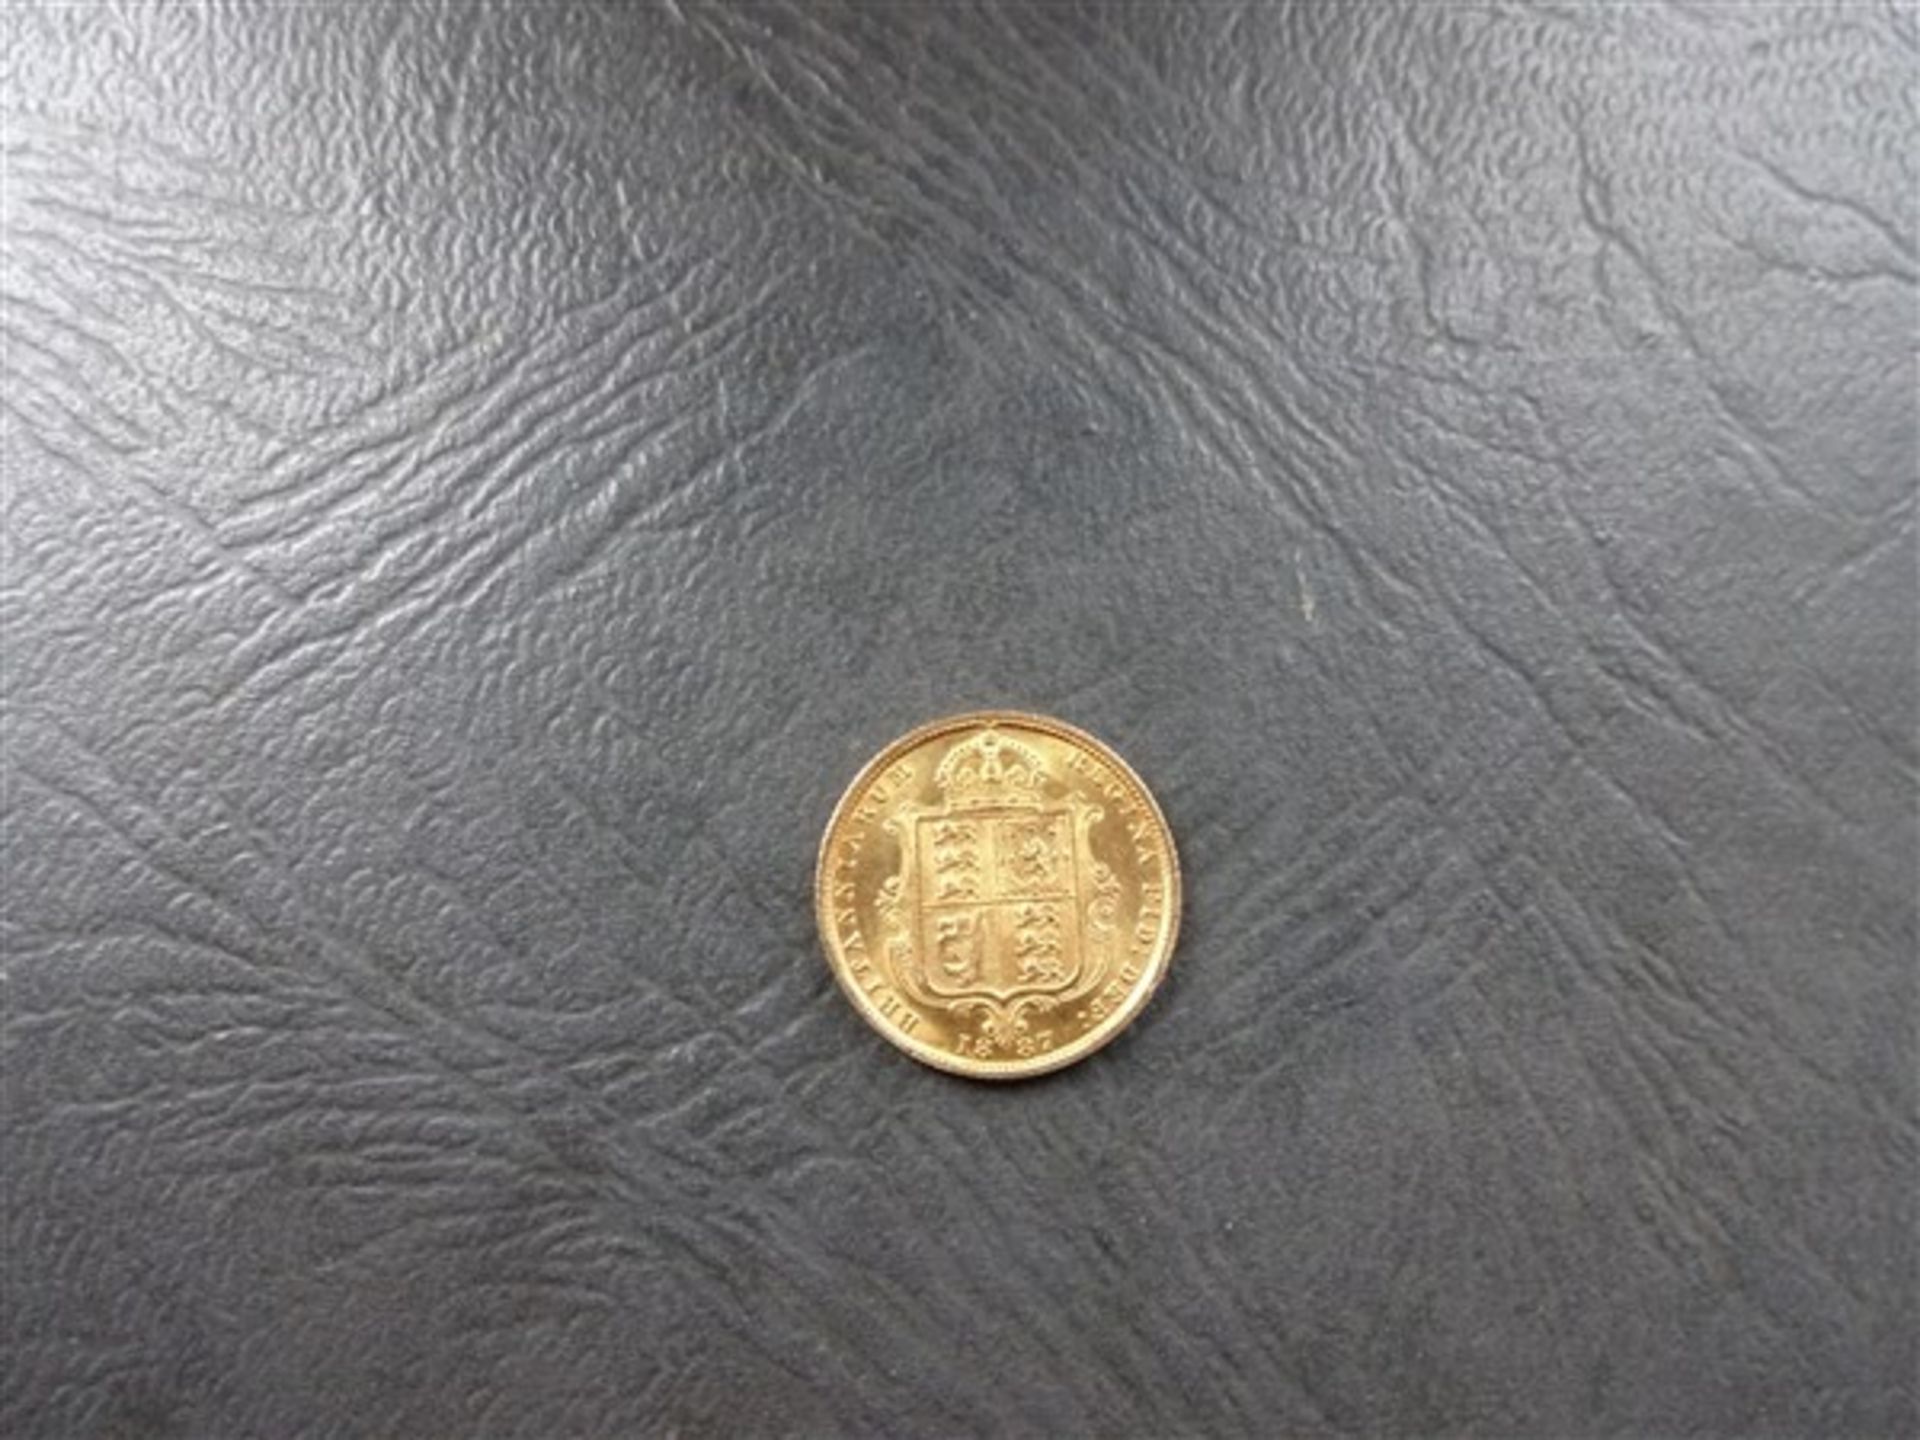 Rare 1887 Gold Half Sovereign Coin - Image 2 of 3